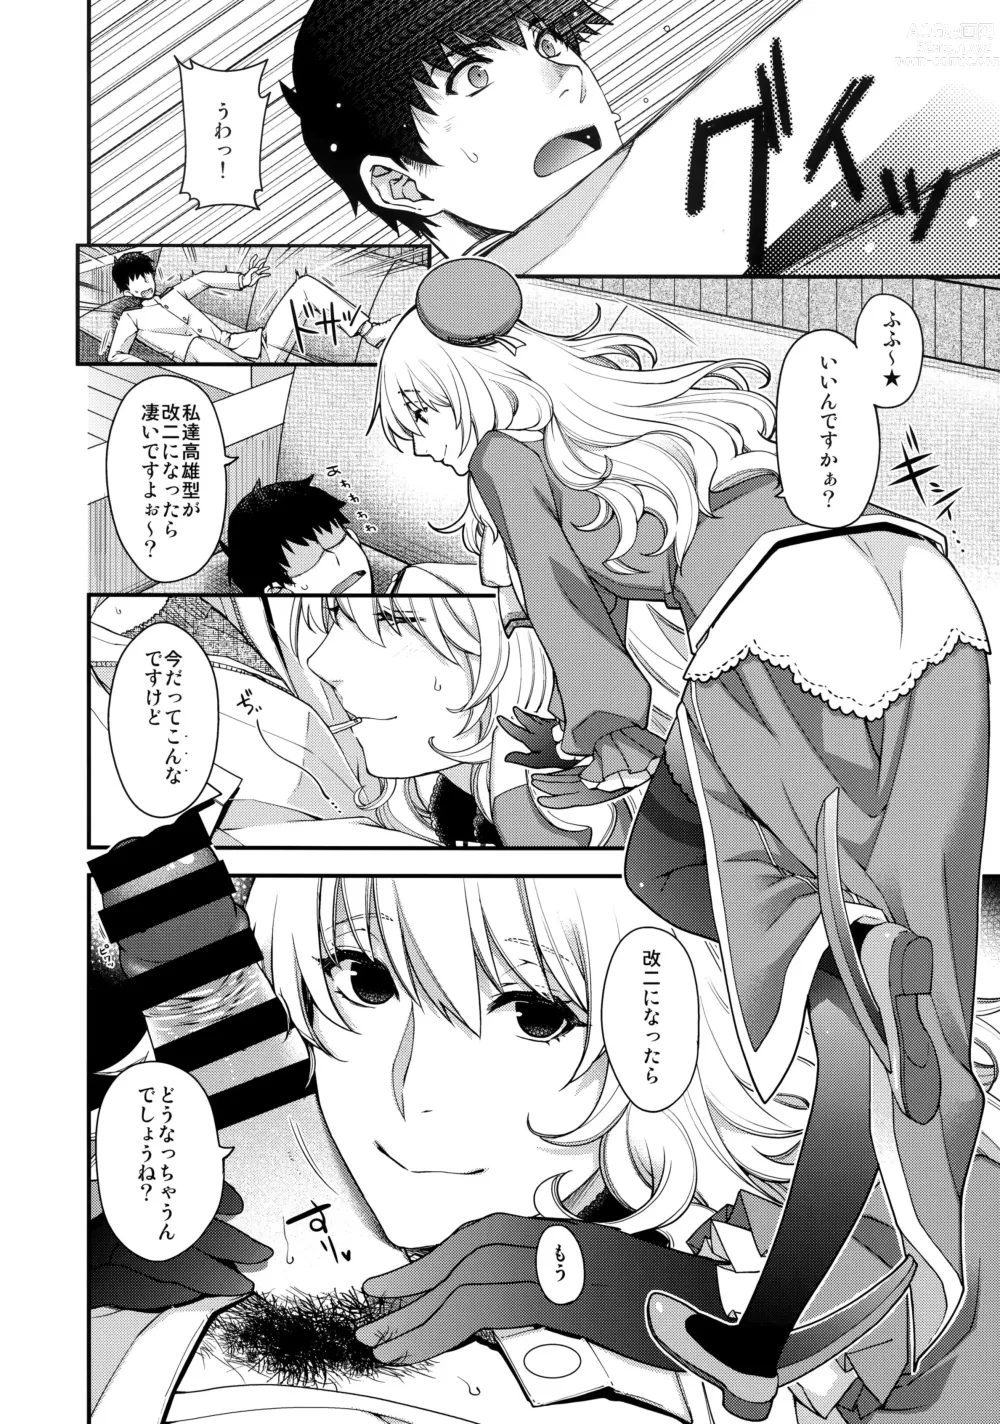 Page 6 of doujinshi Onegai Teitoku!